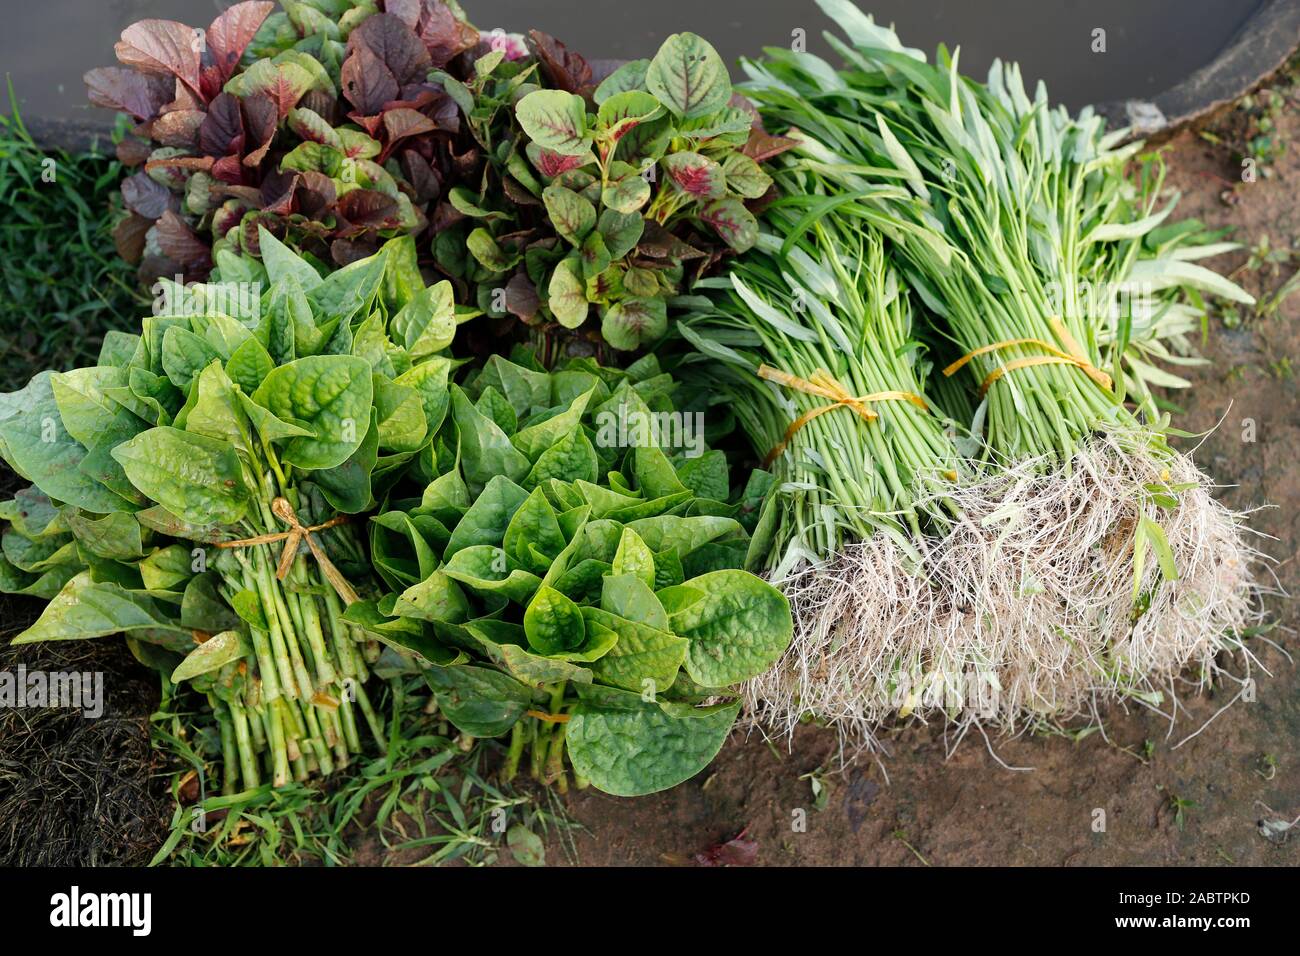 Organic vegetable gardens in Tra Que Village.  Fresh green herbs in basket. Hoi An. Vietnam. Stock Photo